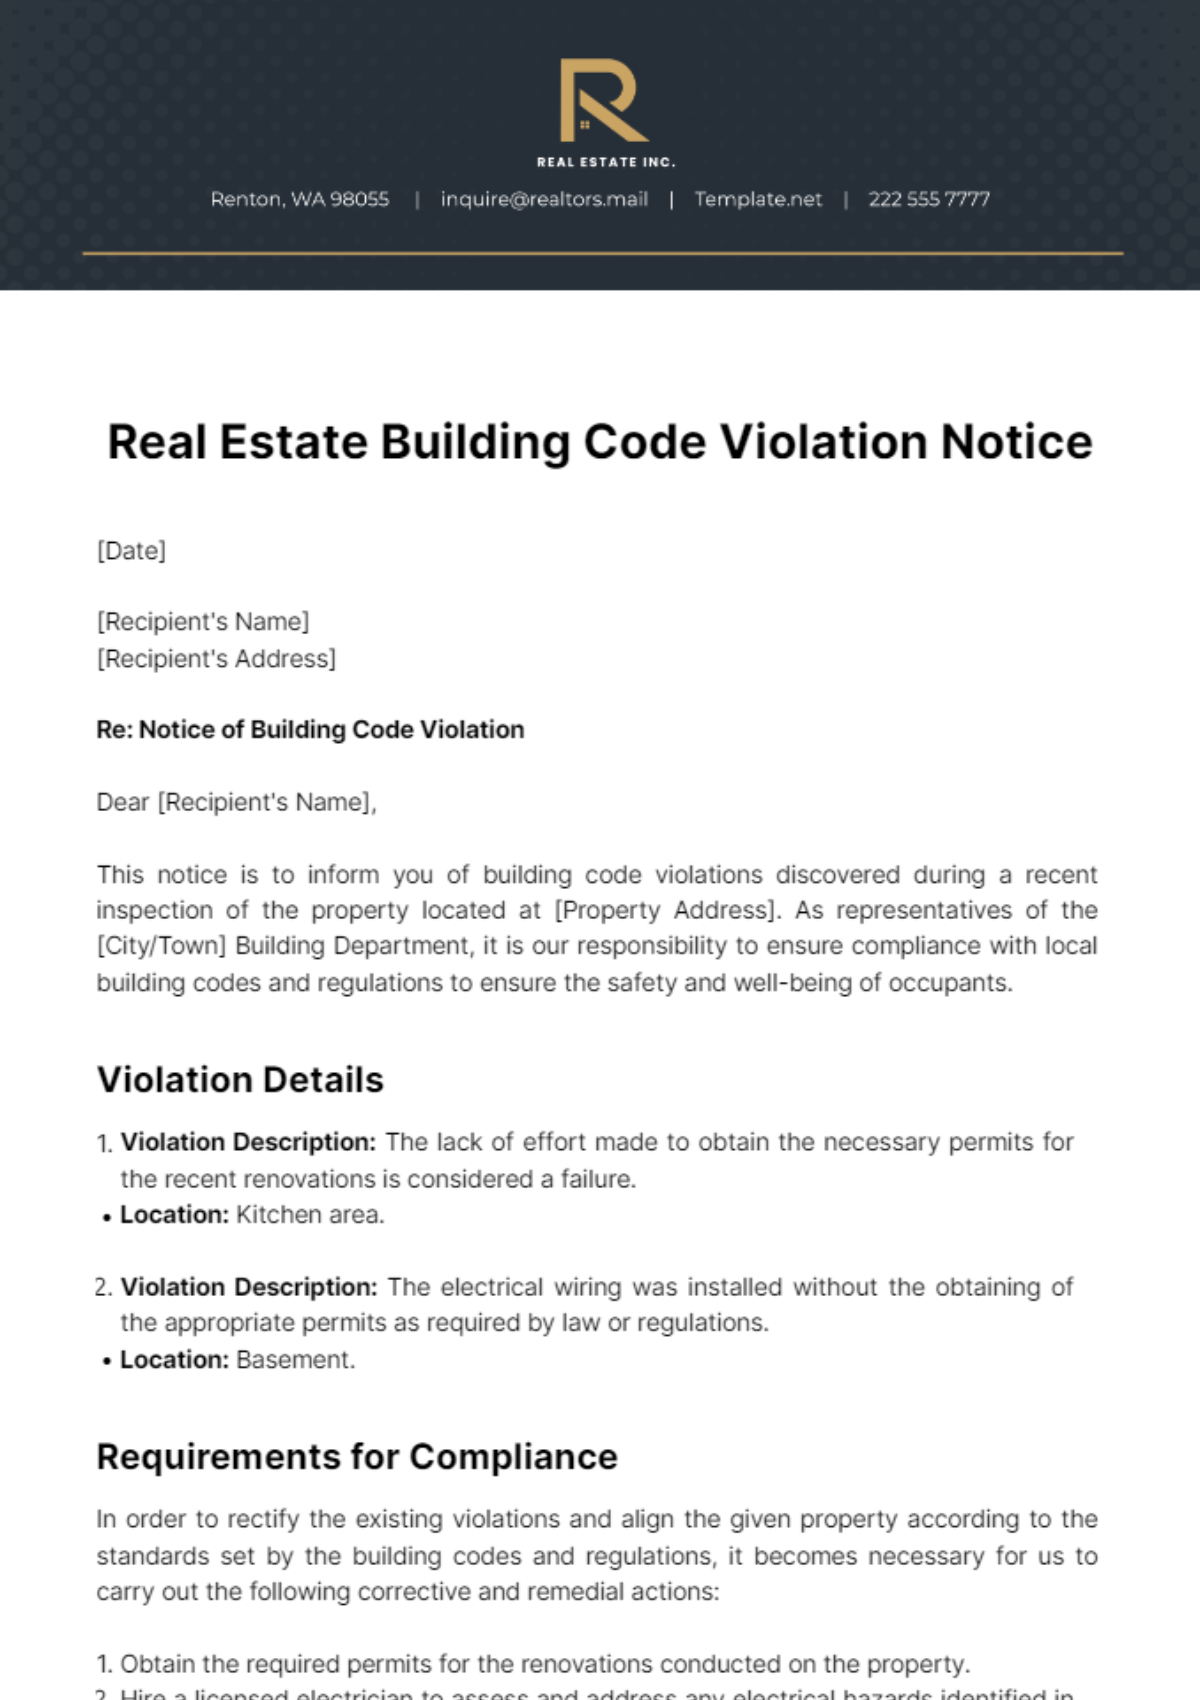 Real Estate Building Code Violation Notice Template